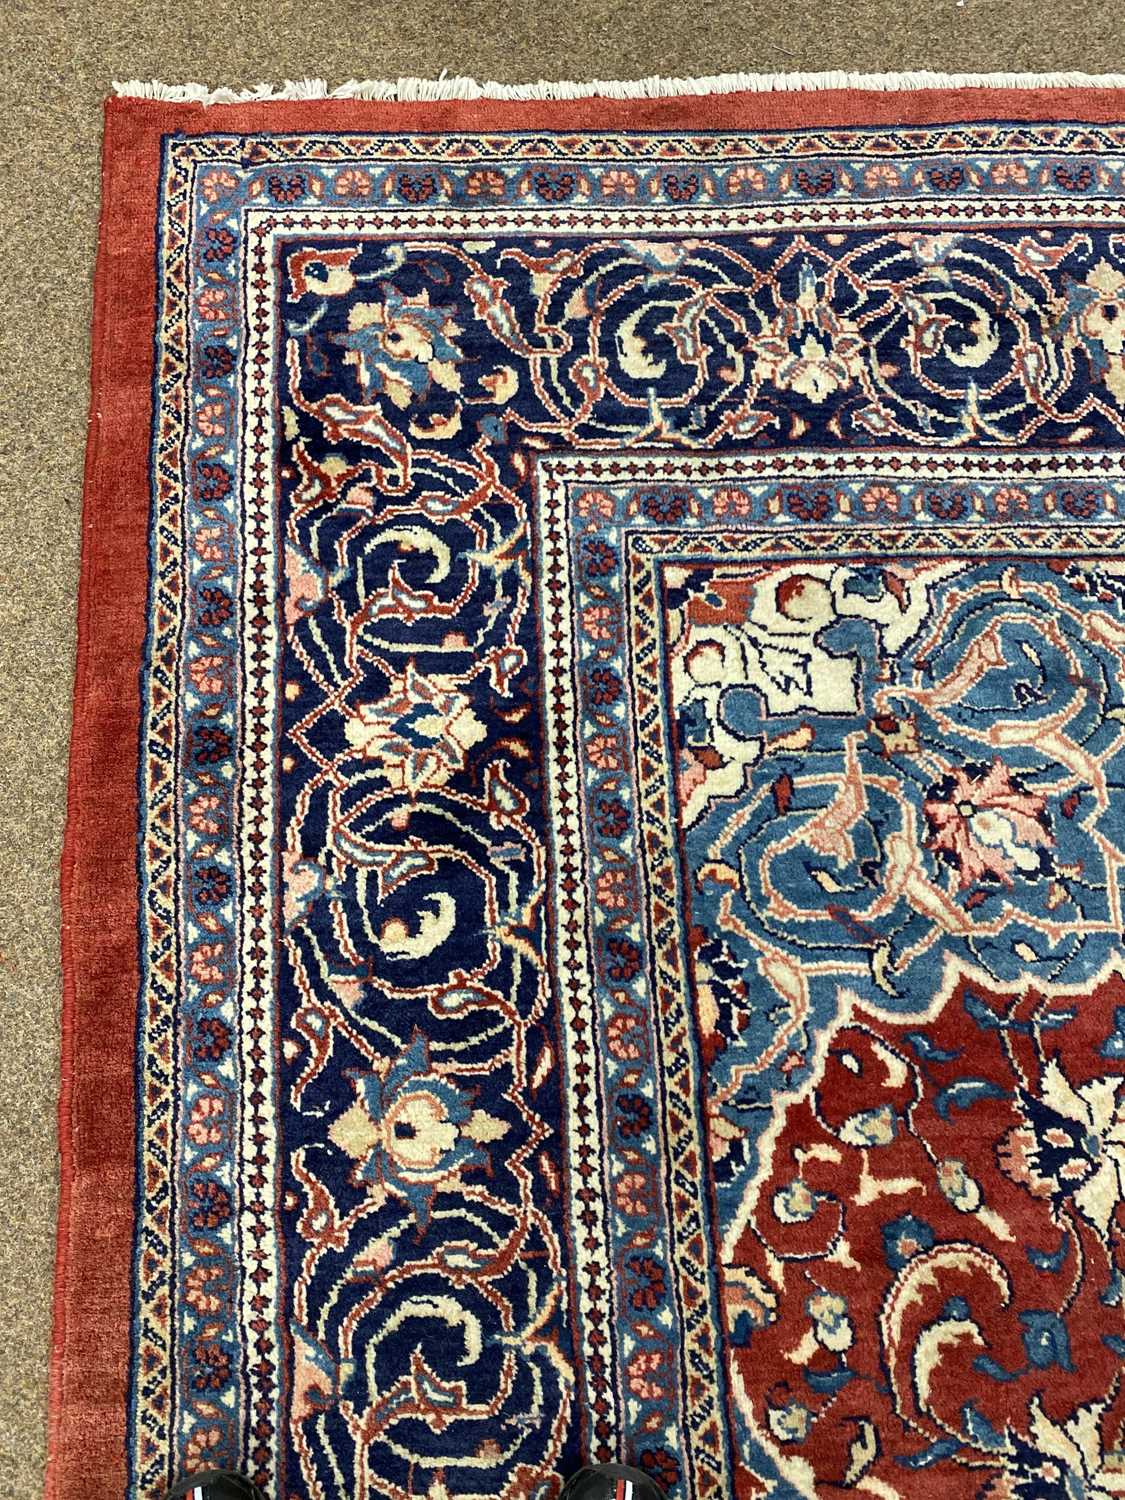 A decorative modern Persian carpet - Image 2 of 4